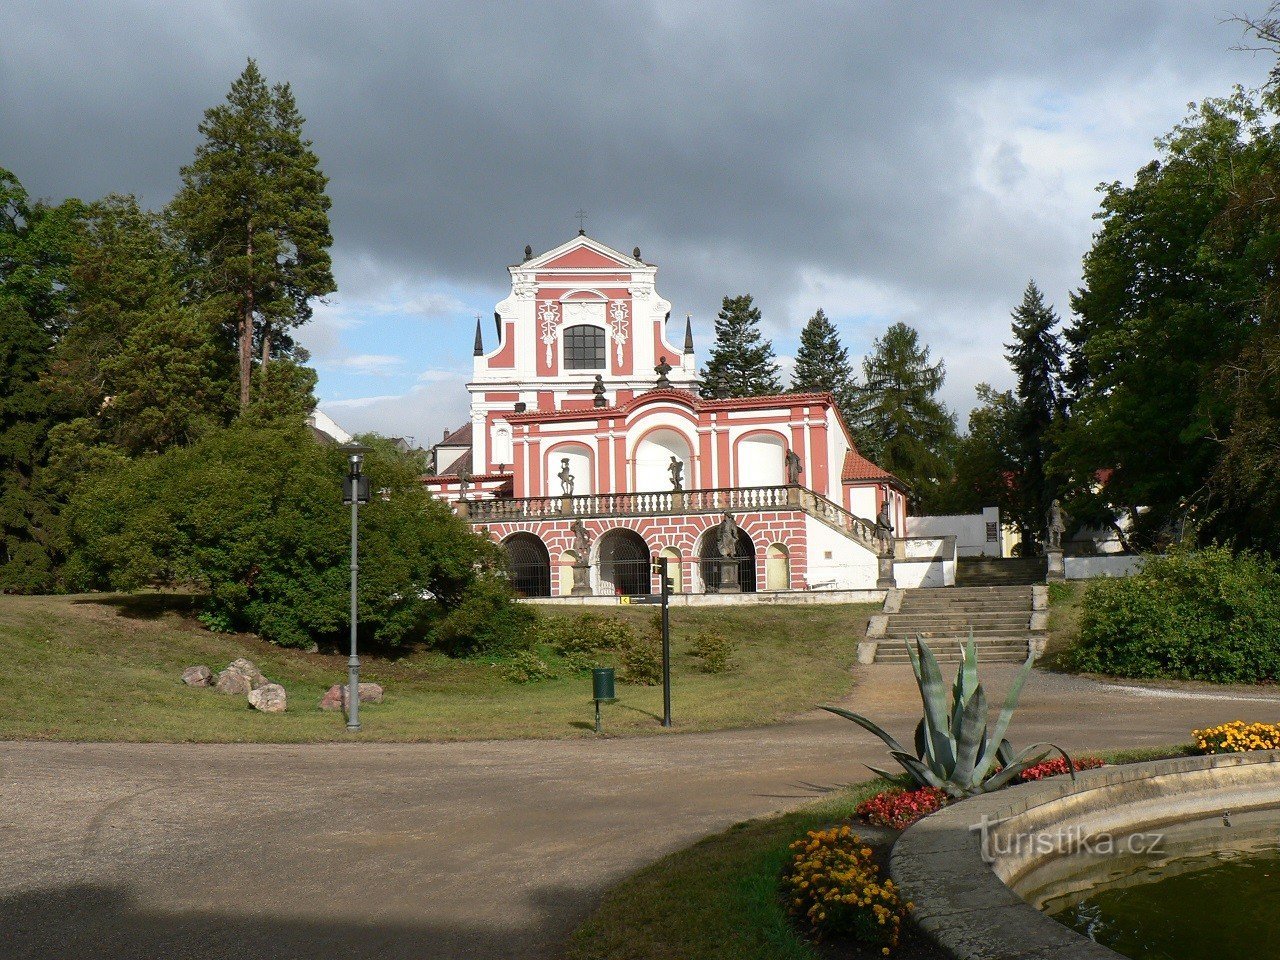 Monastery above Ohří, Sala terrena